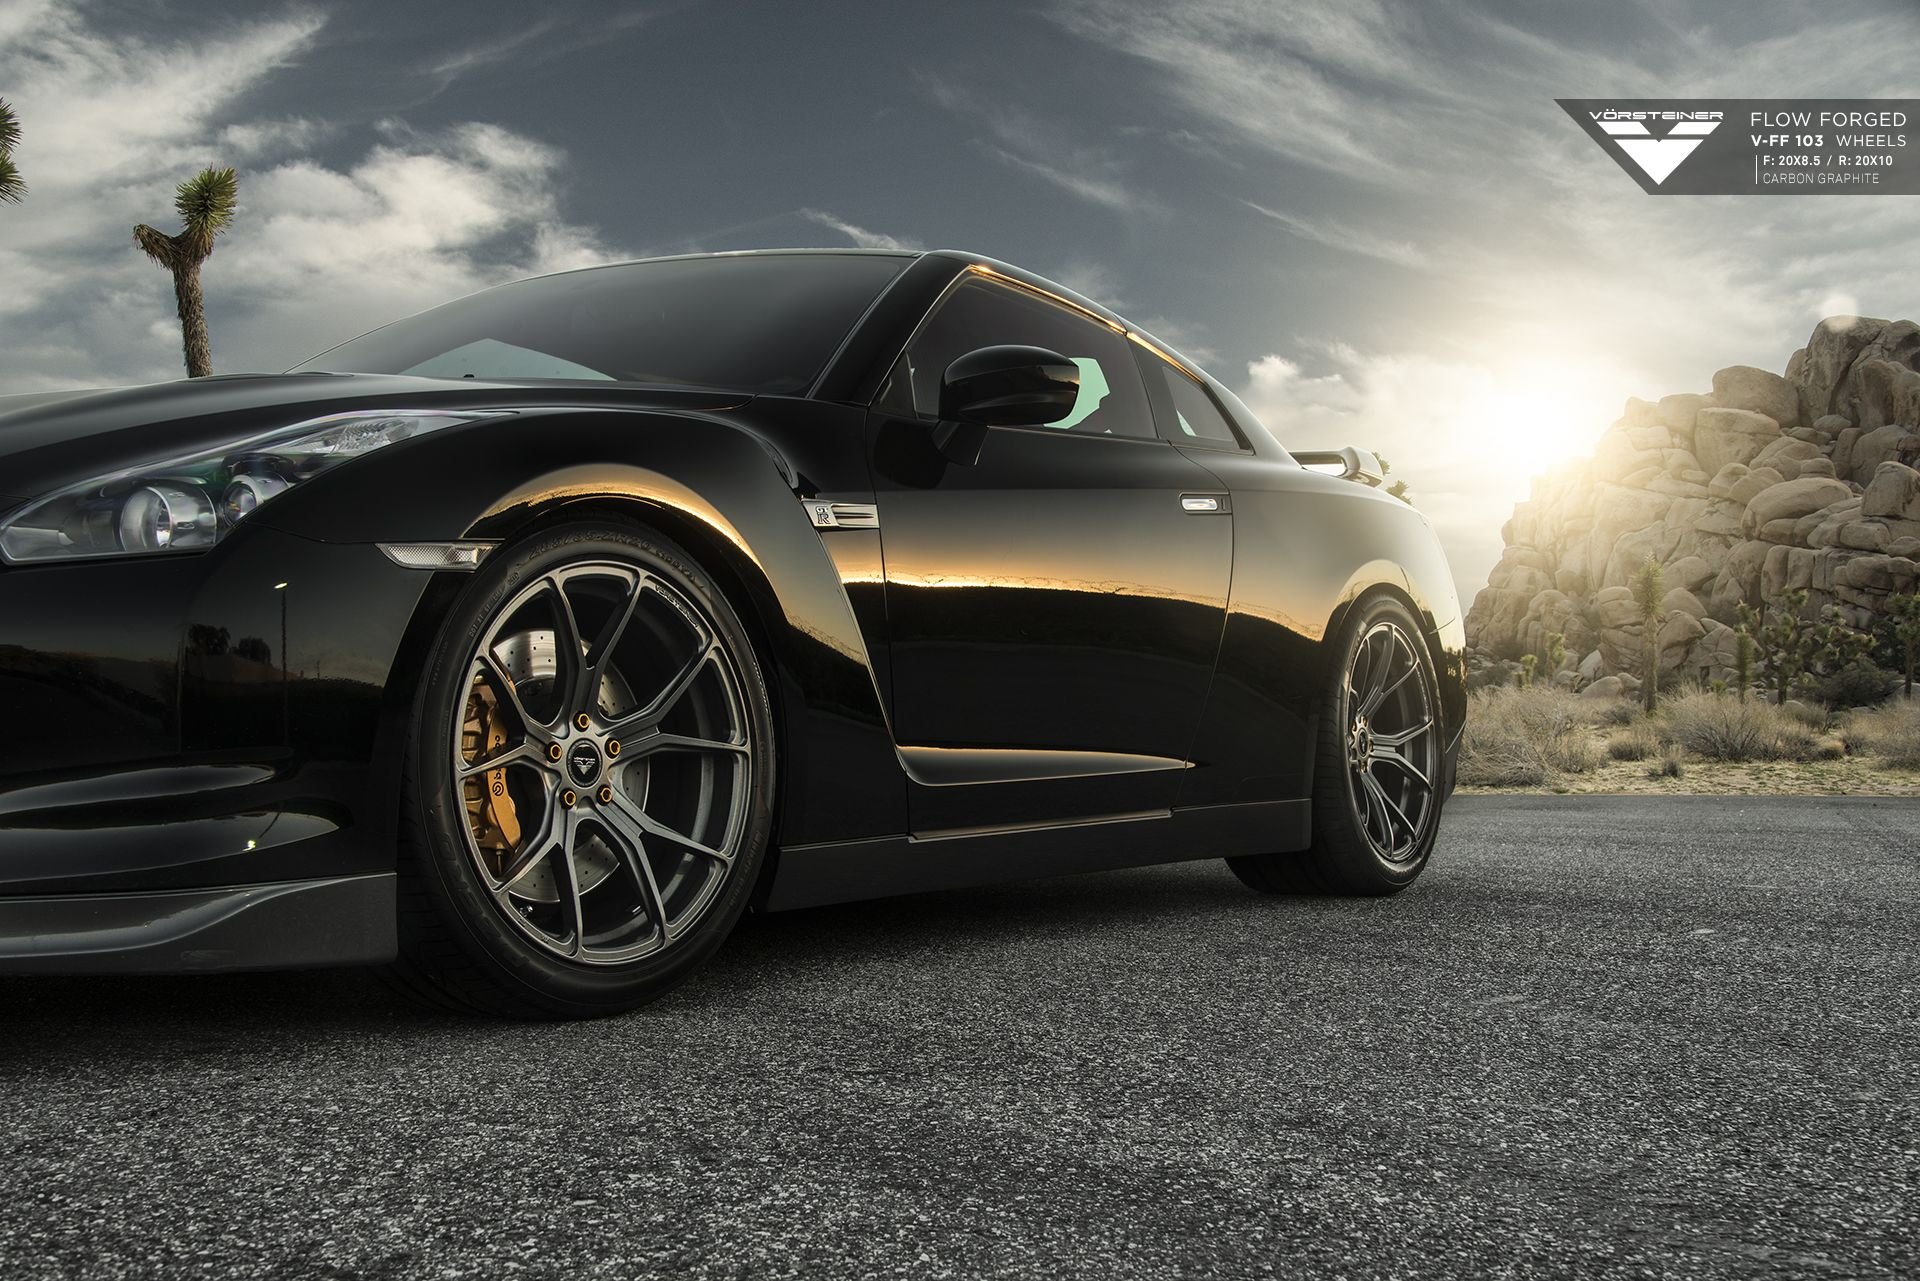 Custom Black Nissan GT-R on Pirelli Tires - Photo by Vorstiner